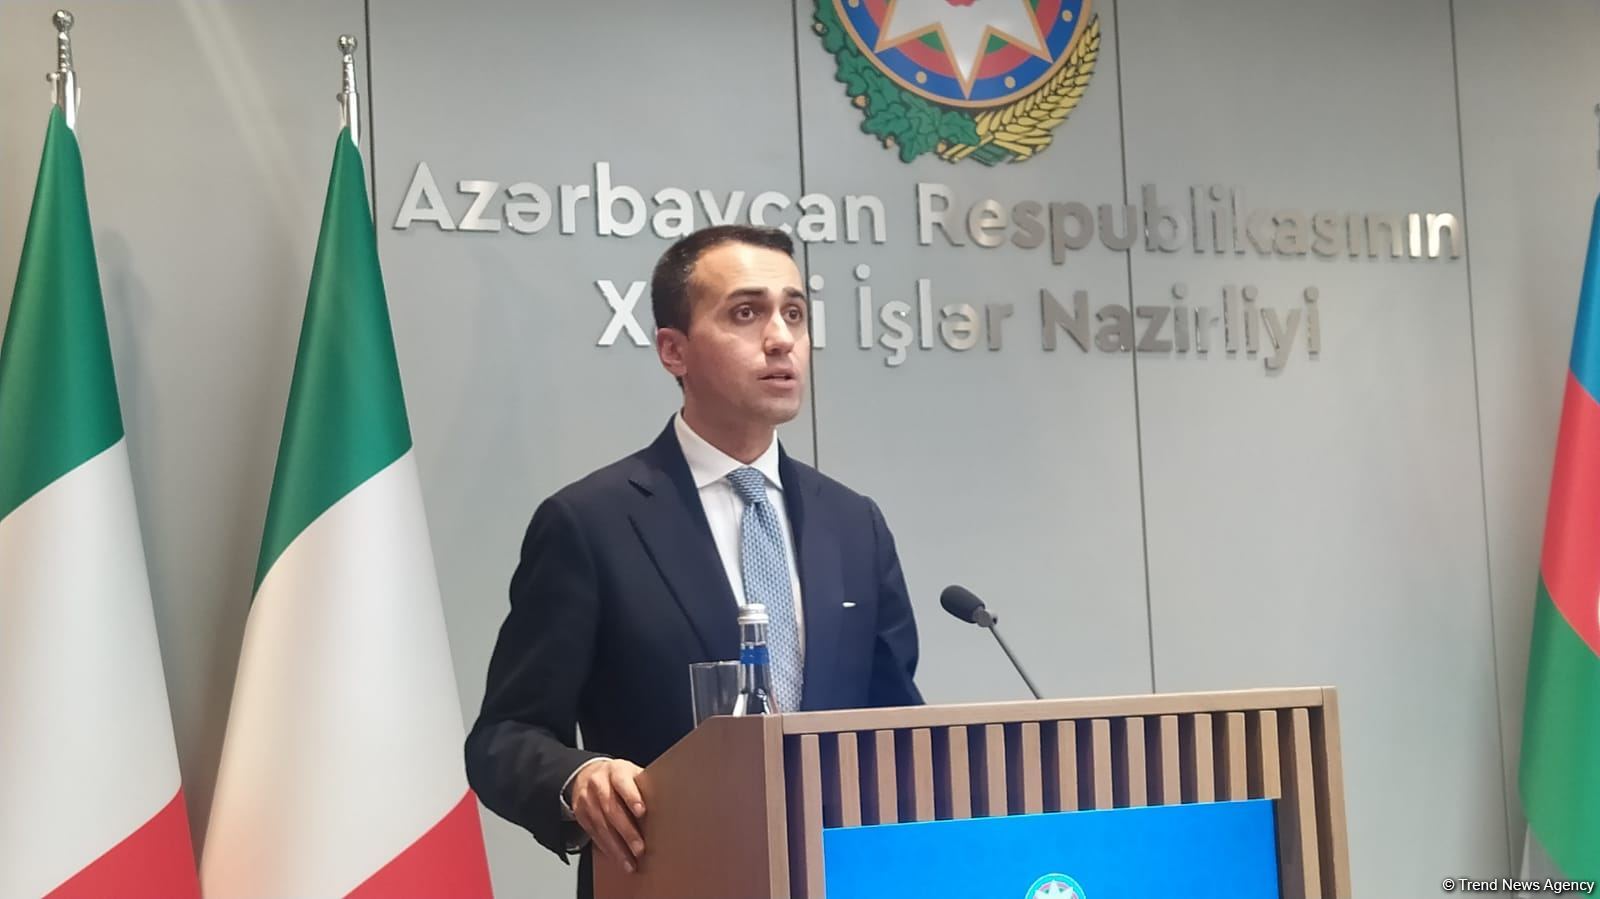 Azerbaijan ranks among Italy's key partners - FM Luigi Di Maio